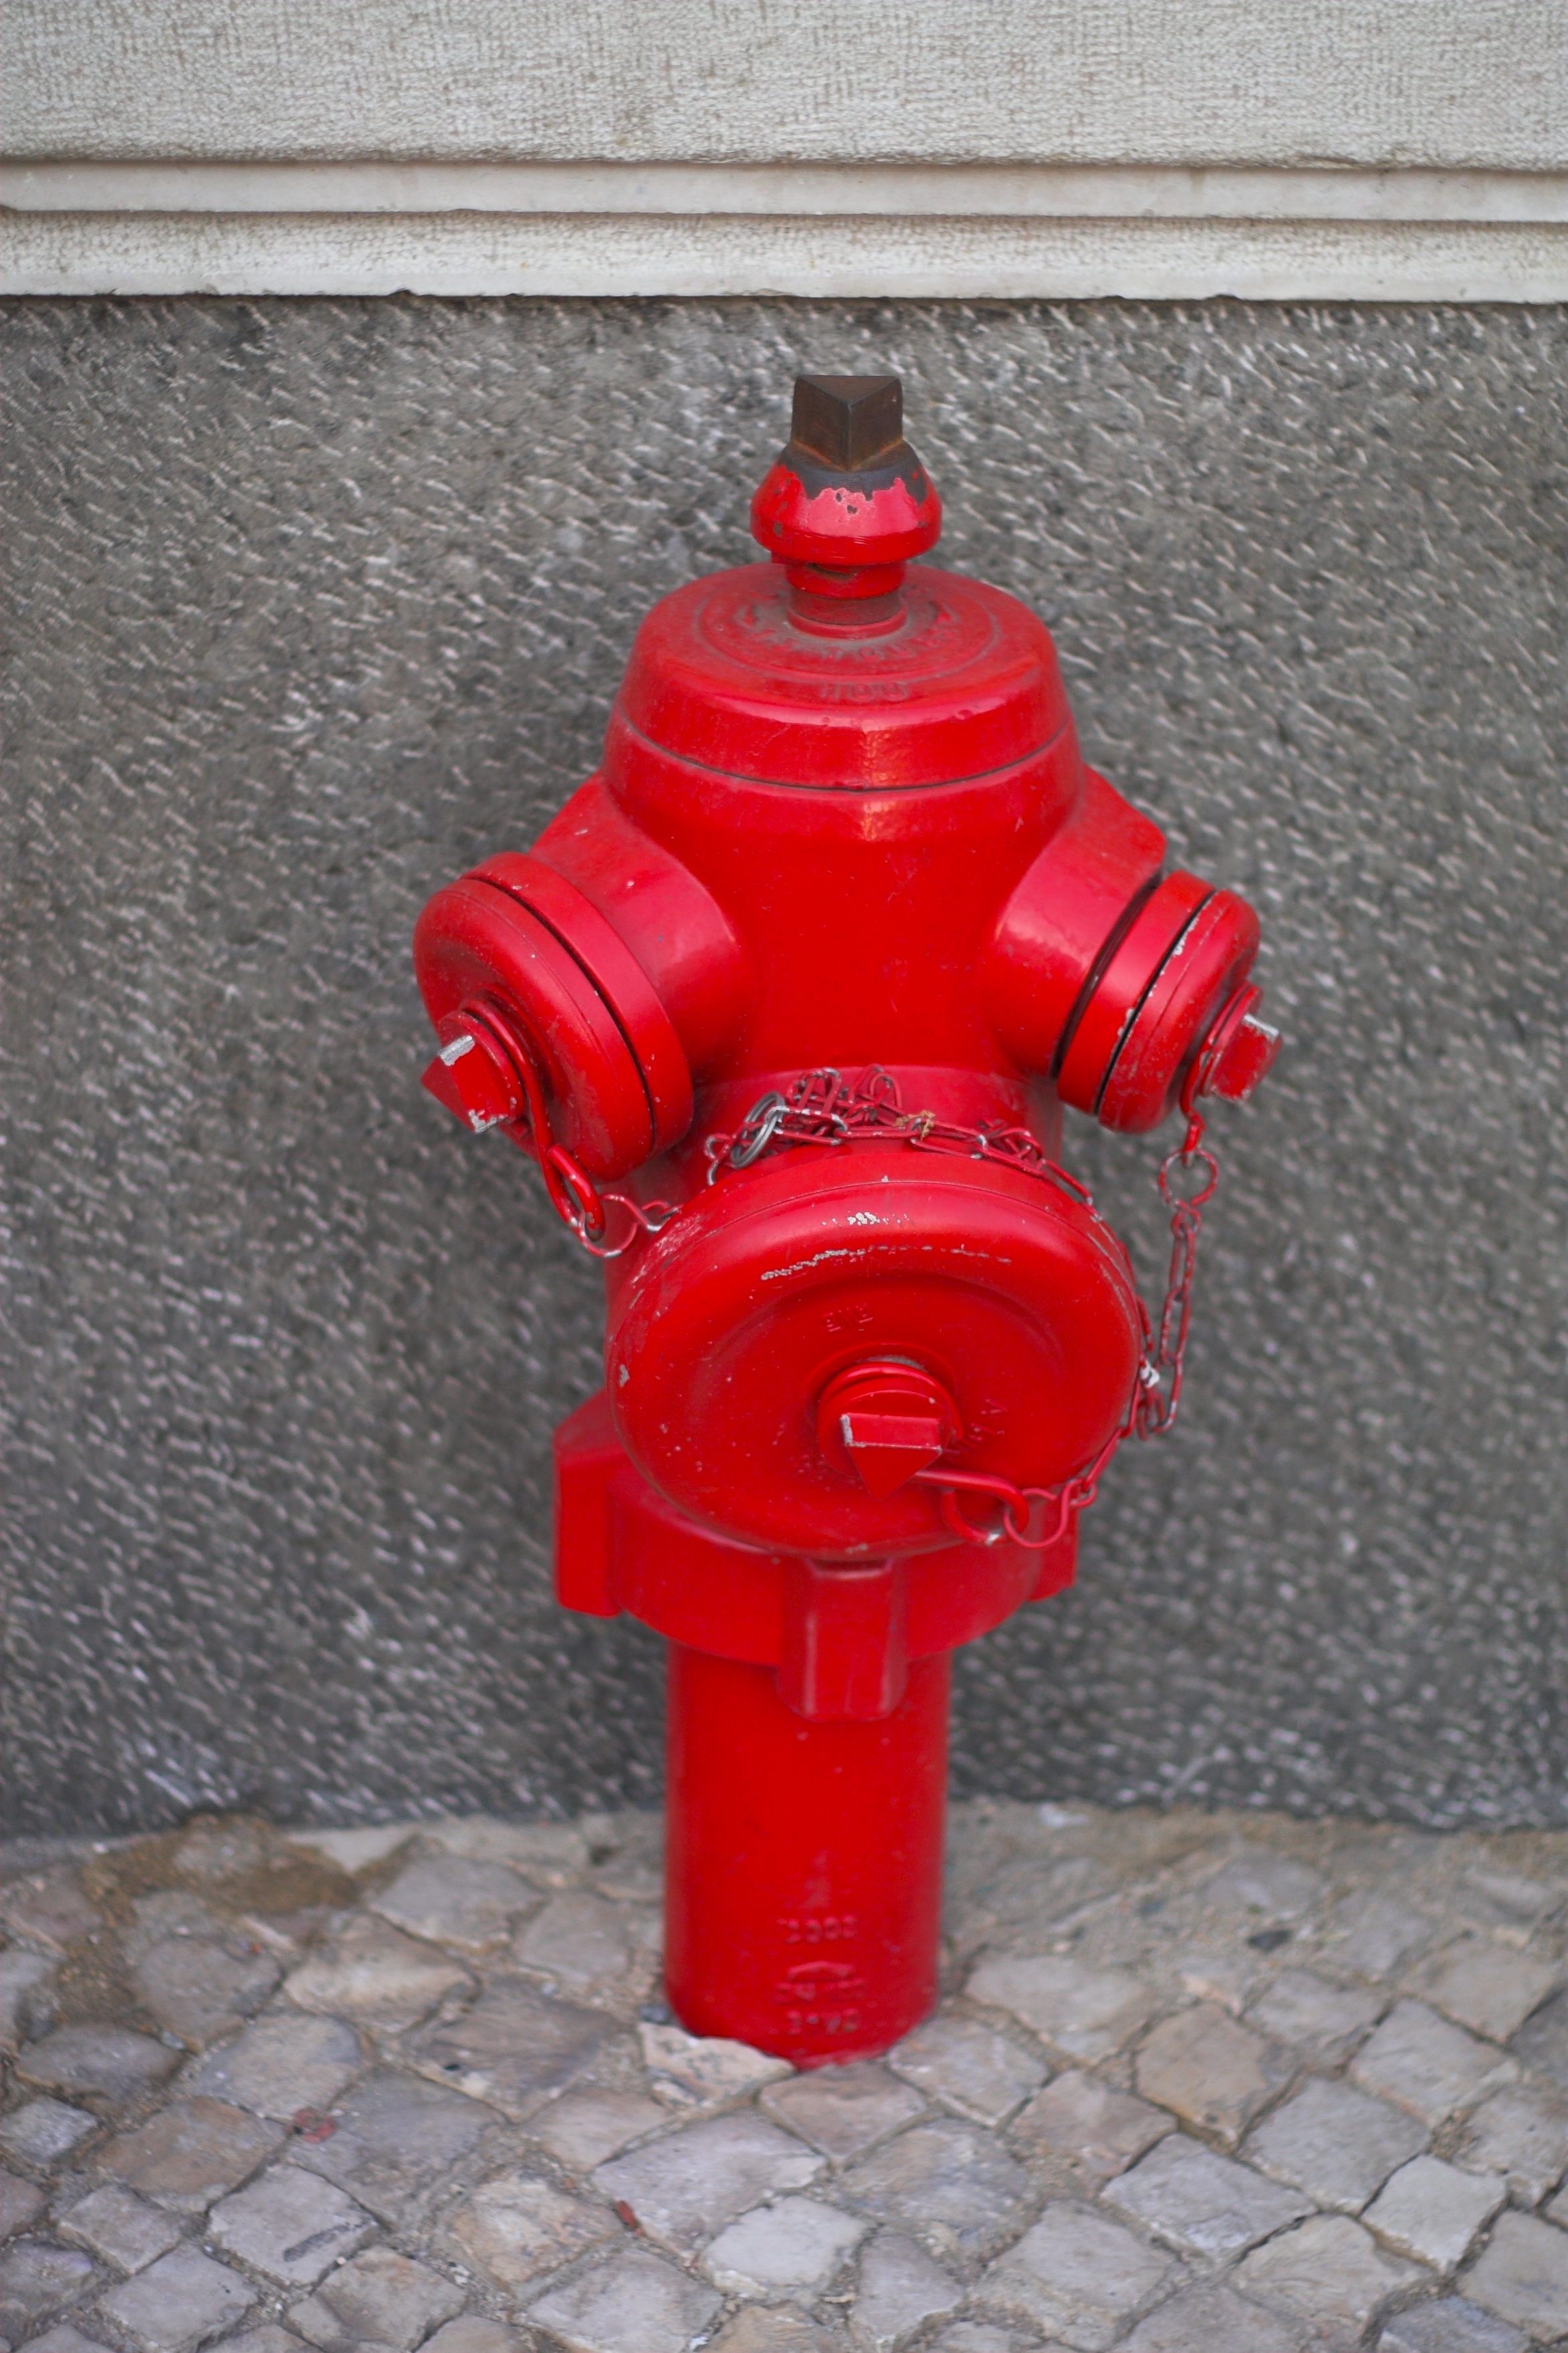 File:Red fire hydrant in Lisbon 01.jpg - Wikimedia Commons